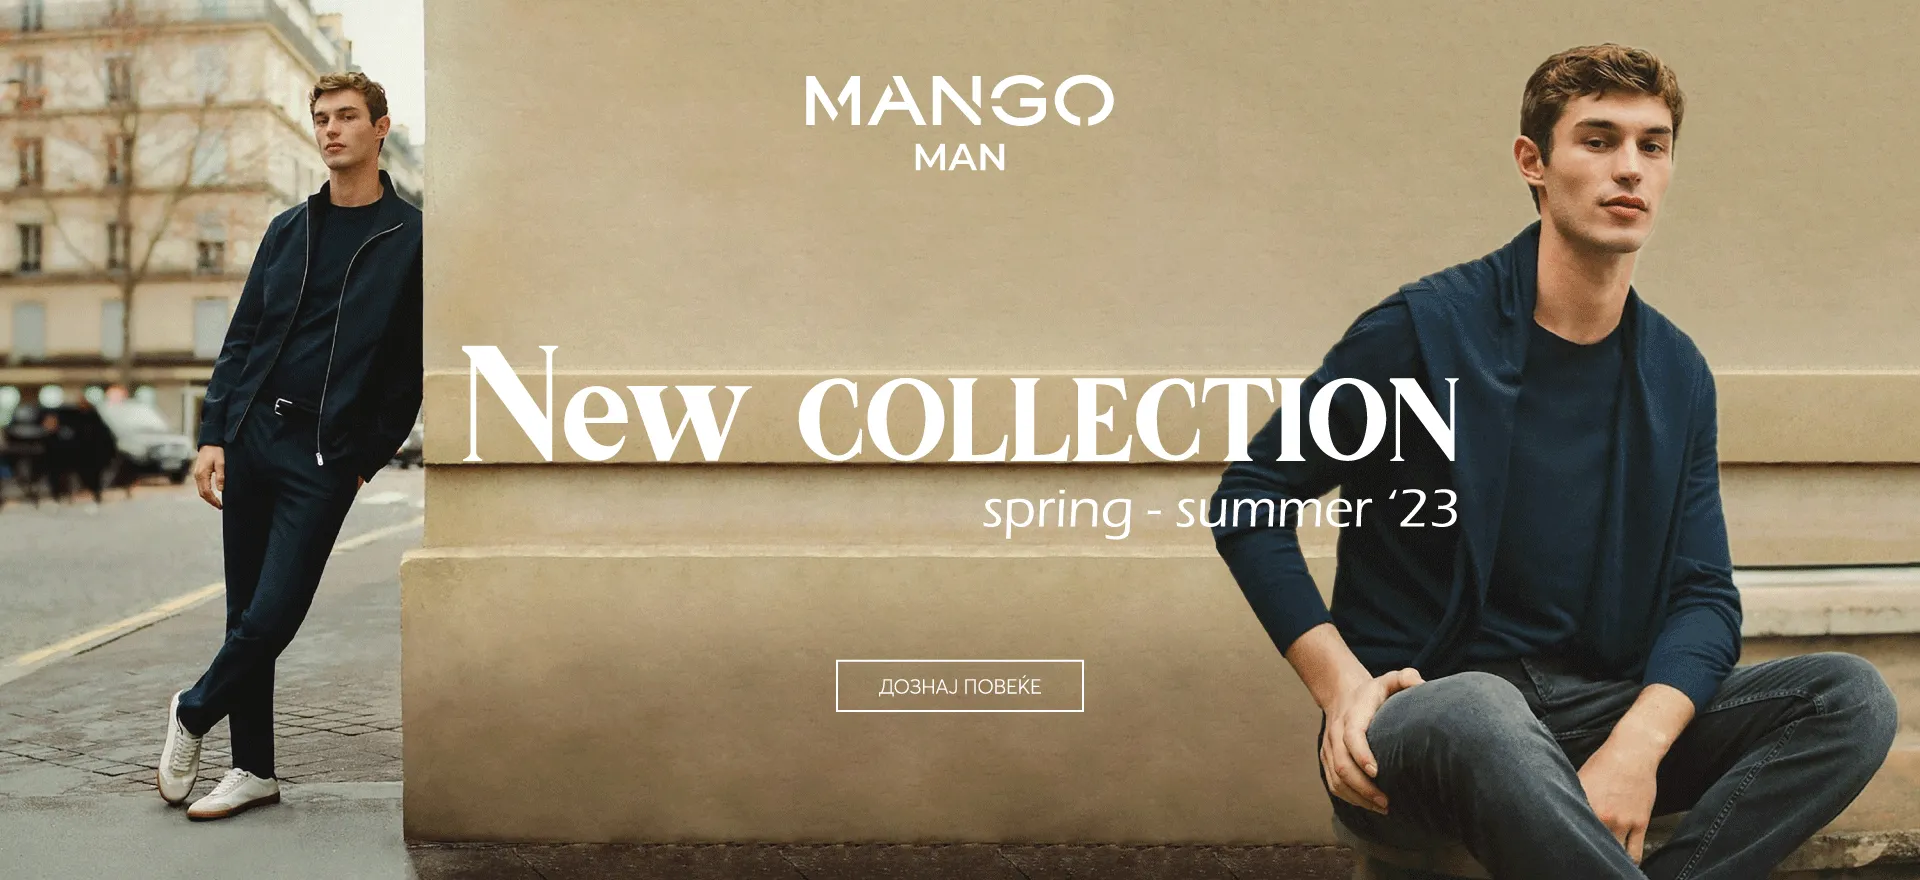 Mango Man New Collection